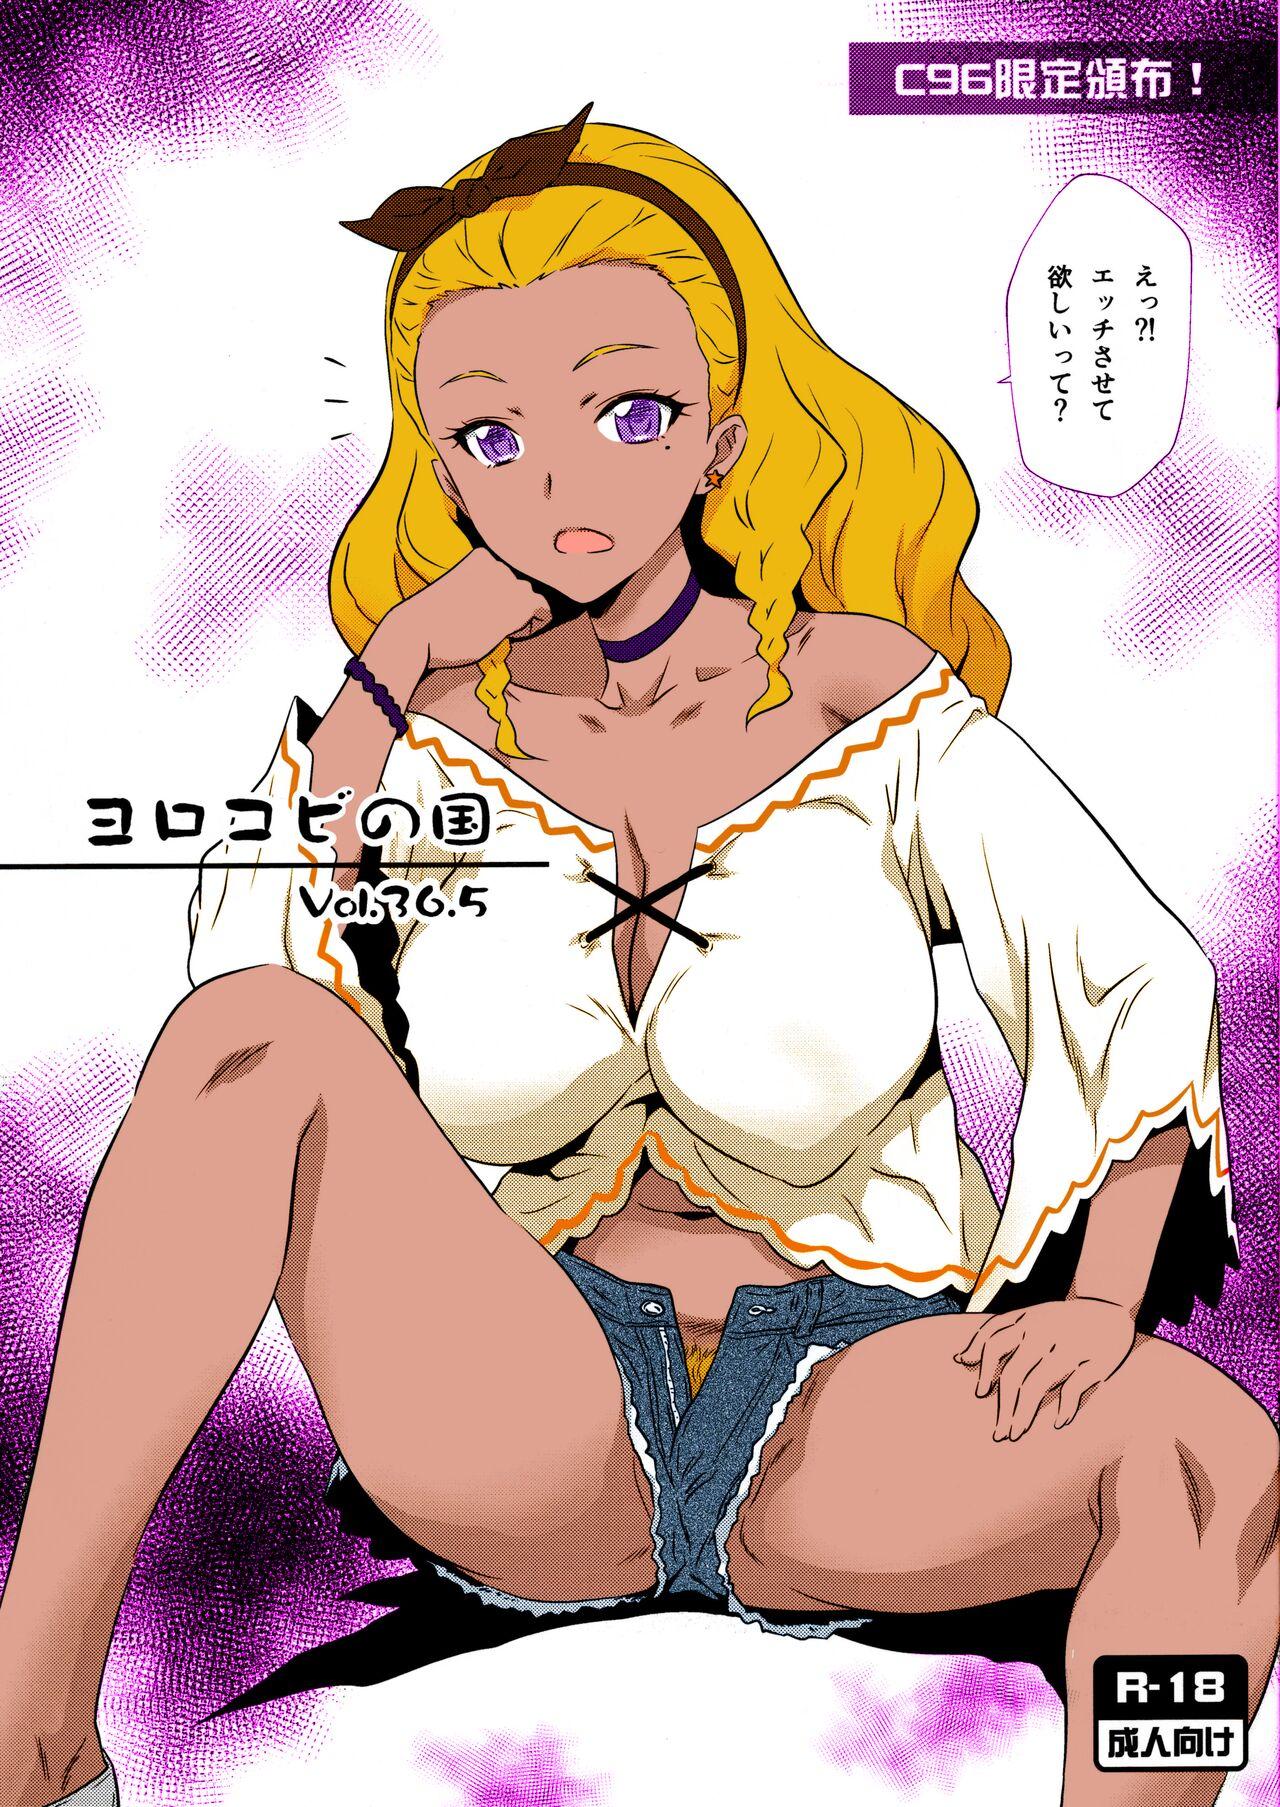 Gay Pawnshop Yorokobi no Kuni Vol. 36.5 - Star twinkle precure Bubble Butt - Picture 1